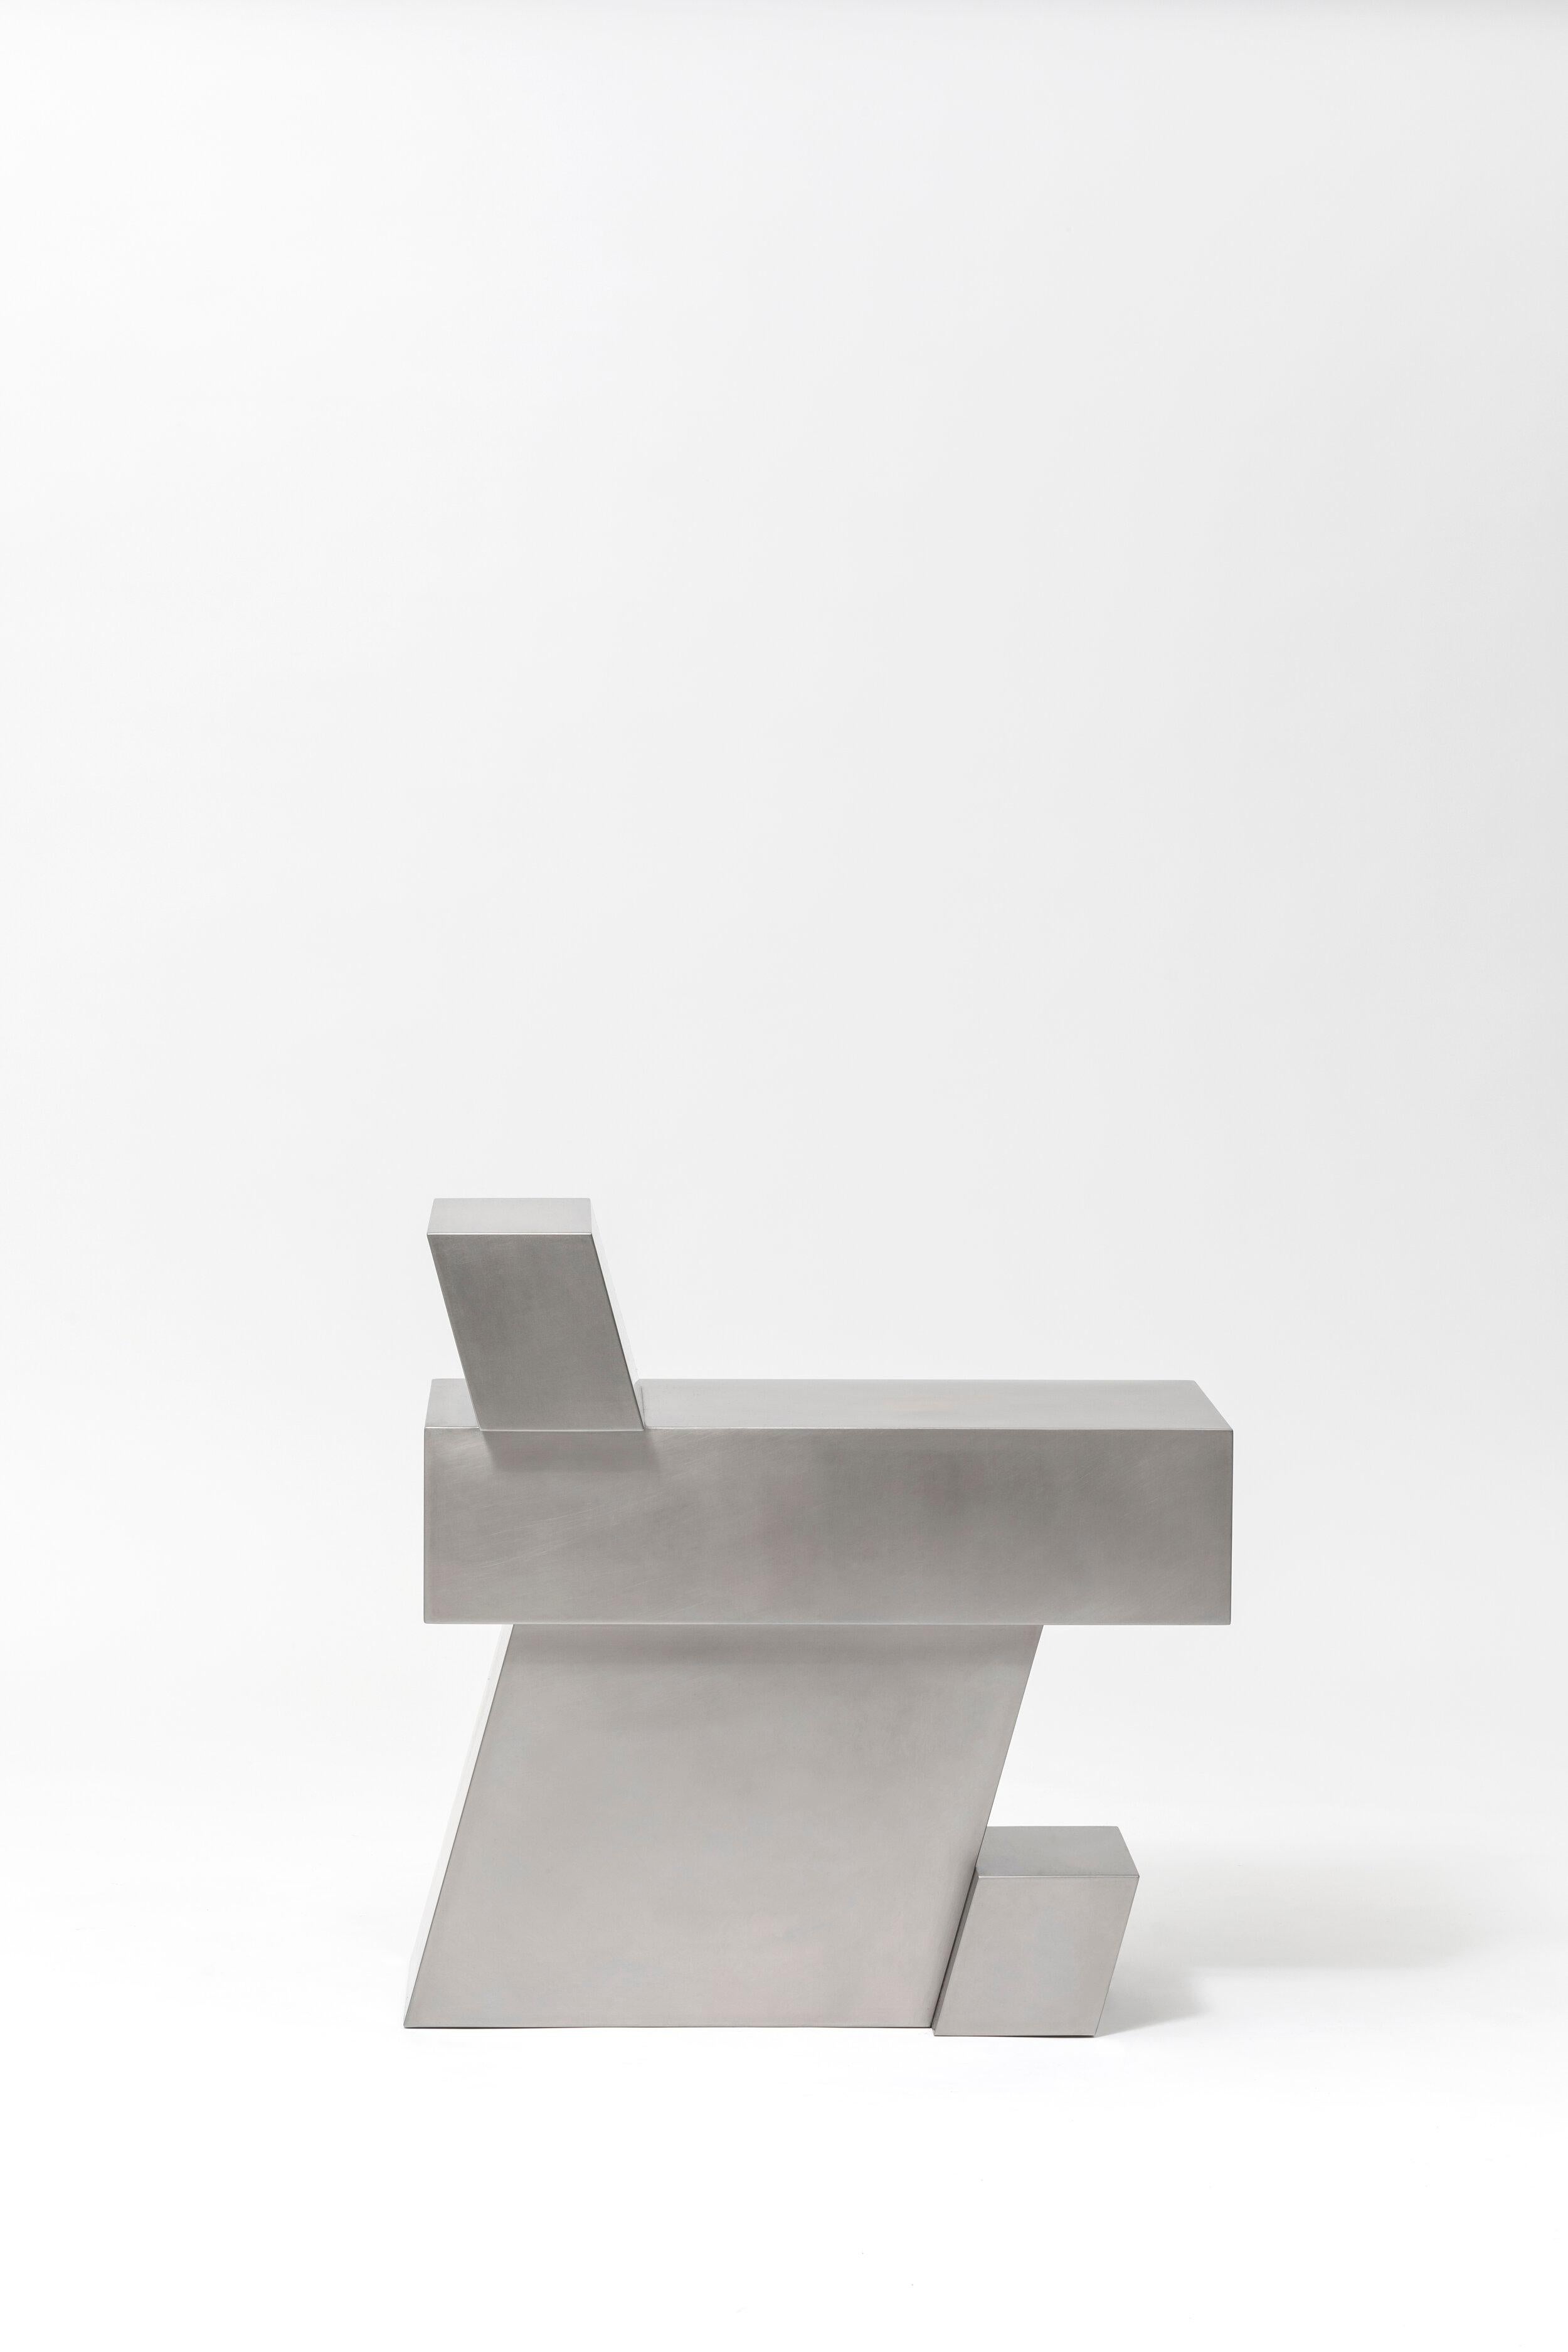 Korean Layered Steel Seat XVI by Hyungshin Hwang For Sale